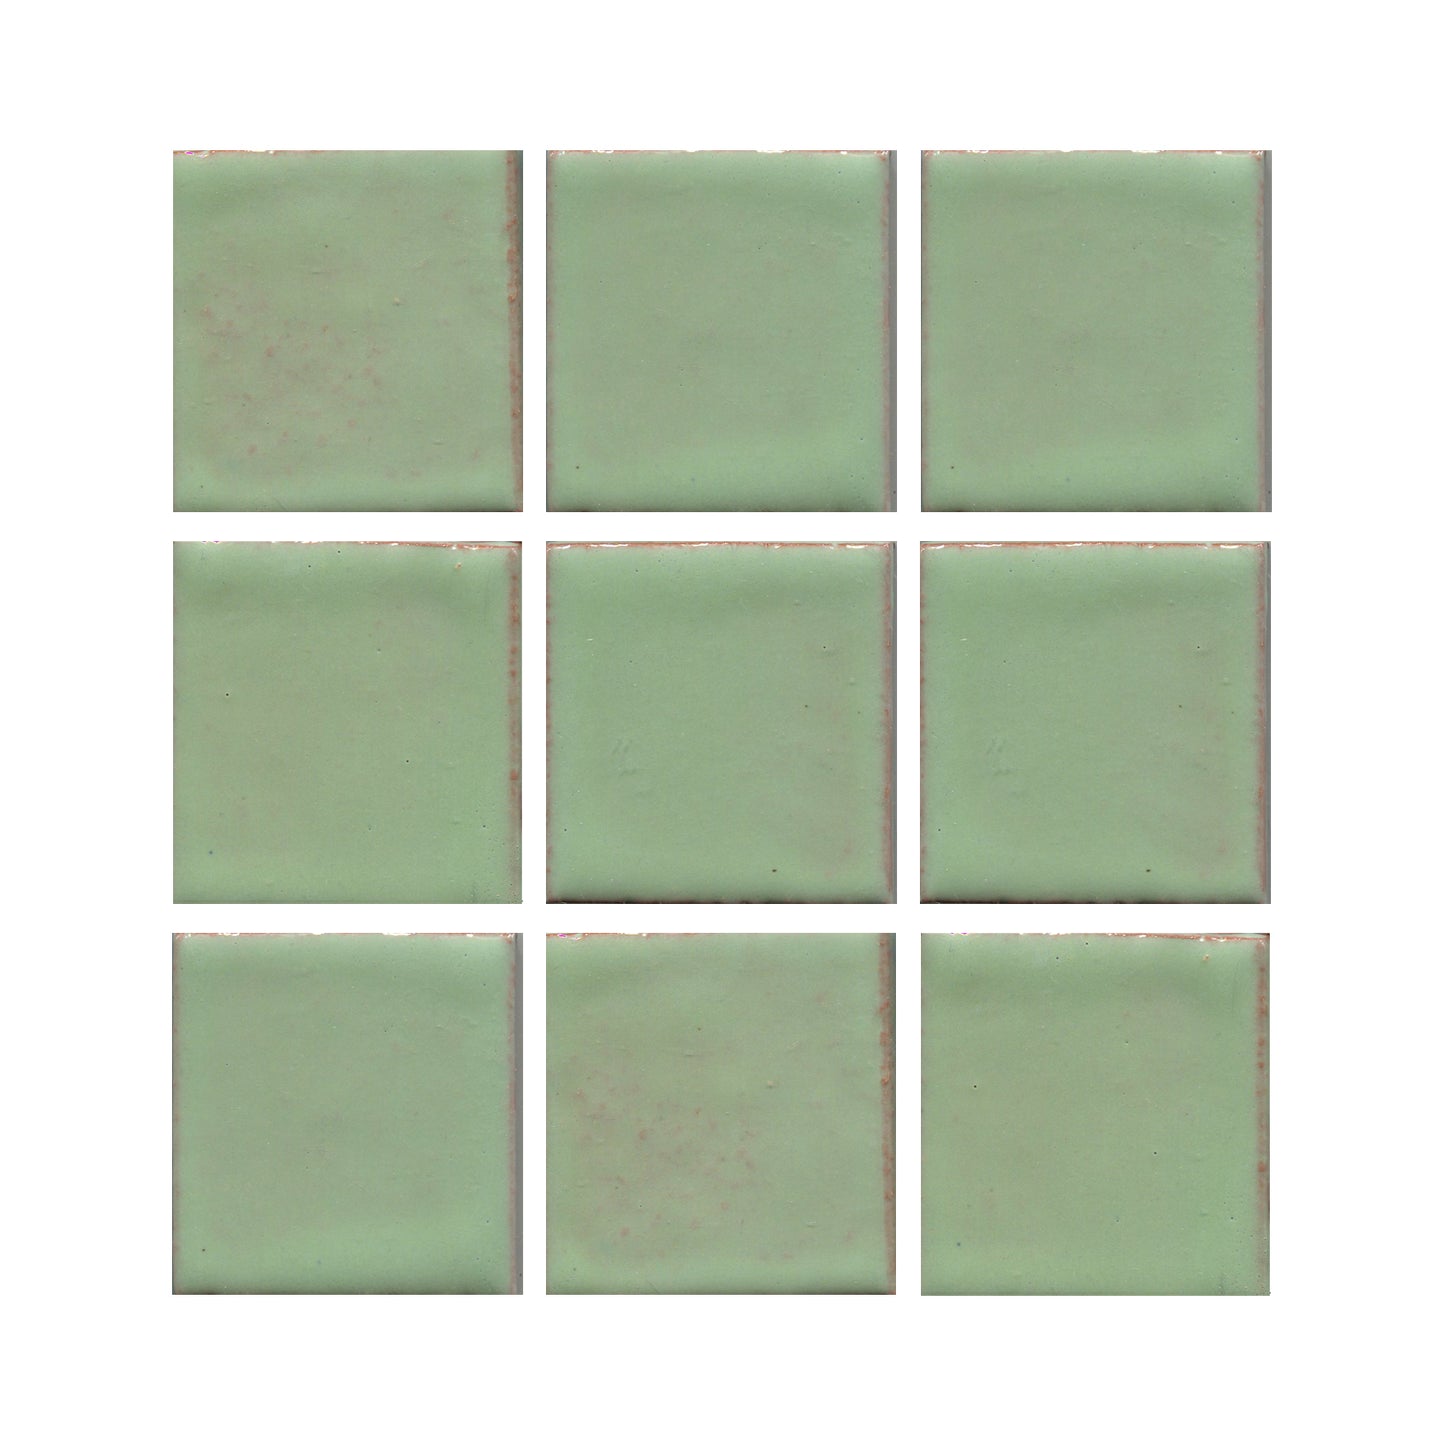 Grasshopper green3x3 field tile